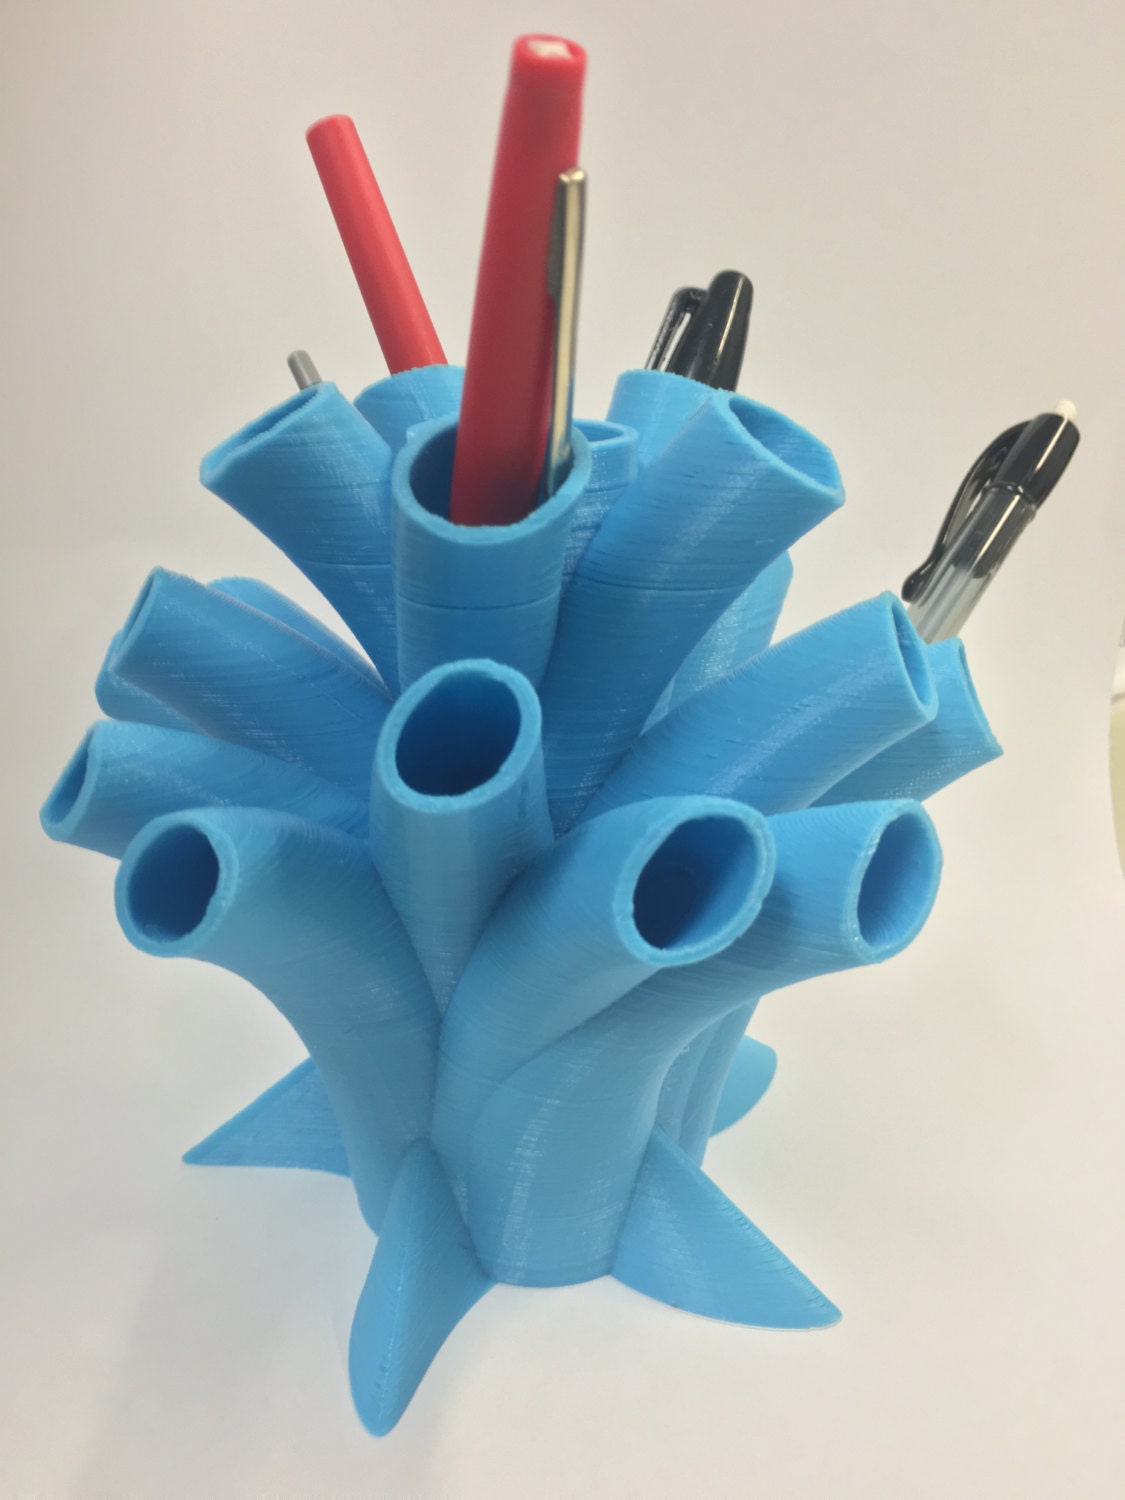 3D Printed Organic Pen Holder